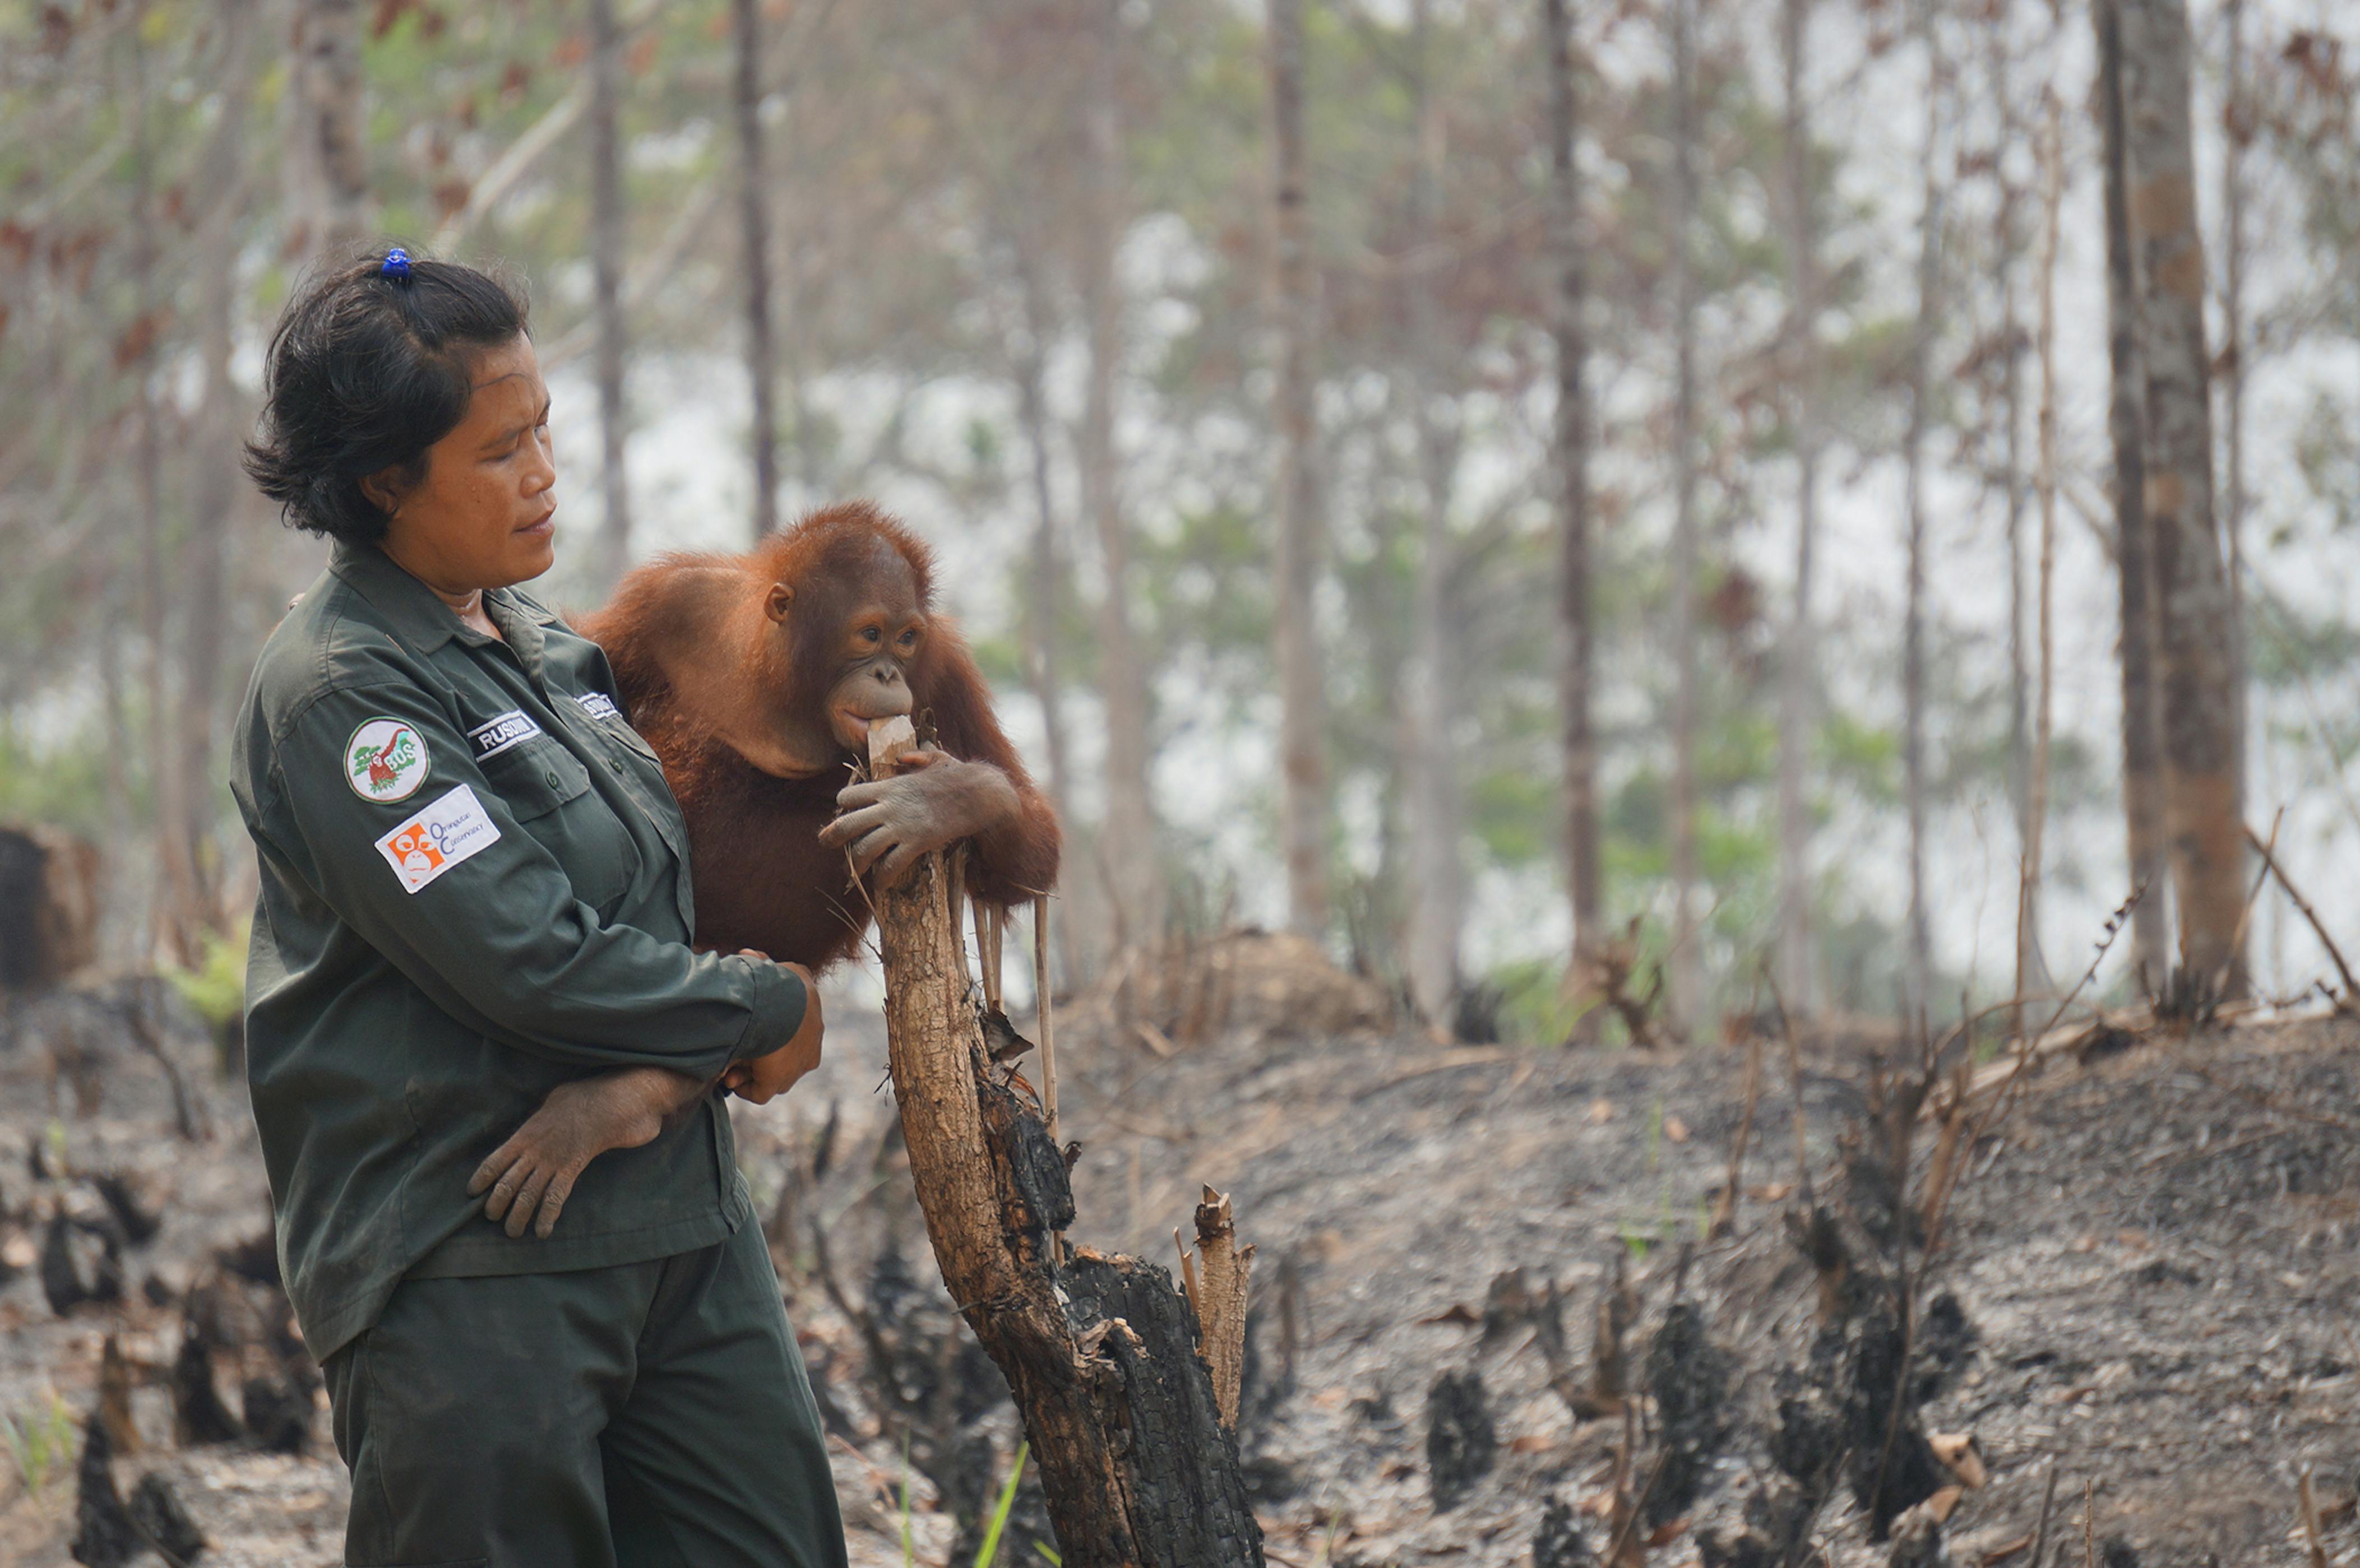 orangutan homes burnt